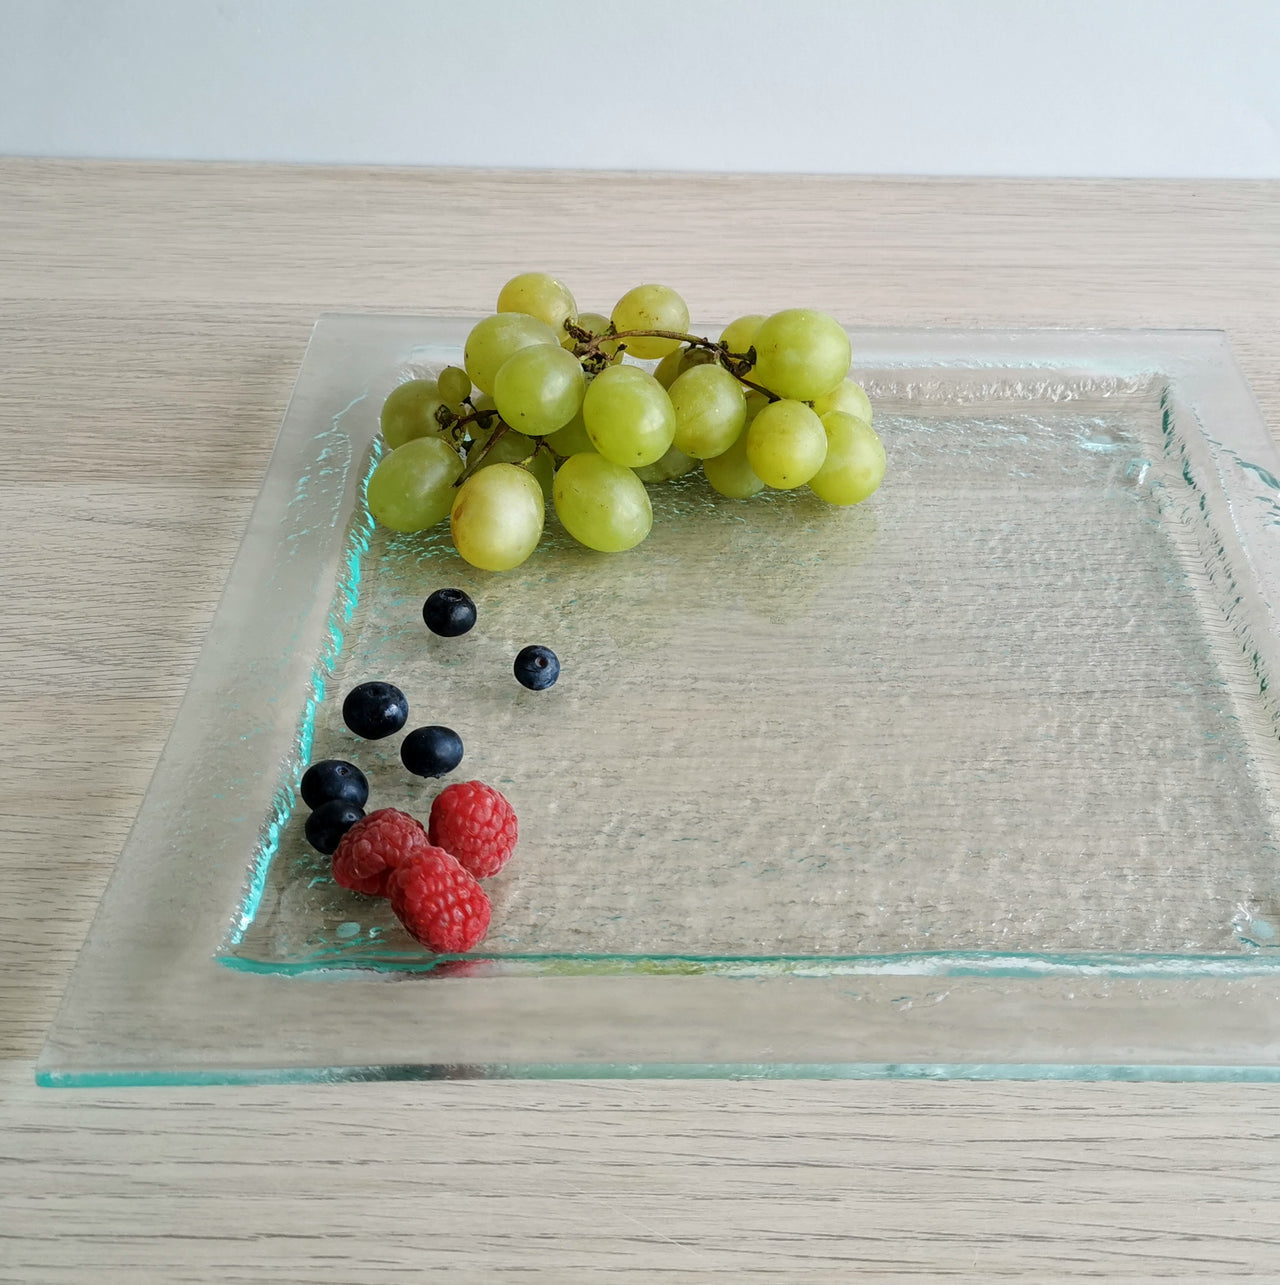 New York Minimalist Clear Glass Main Course Plate. Transparent Glass Plate - 10 13/16"x10 13/16" (27,5cm.x27,5cm.)